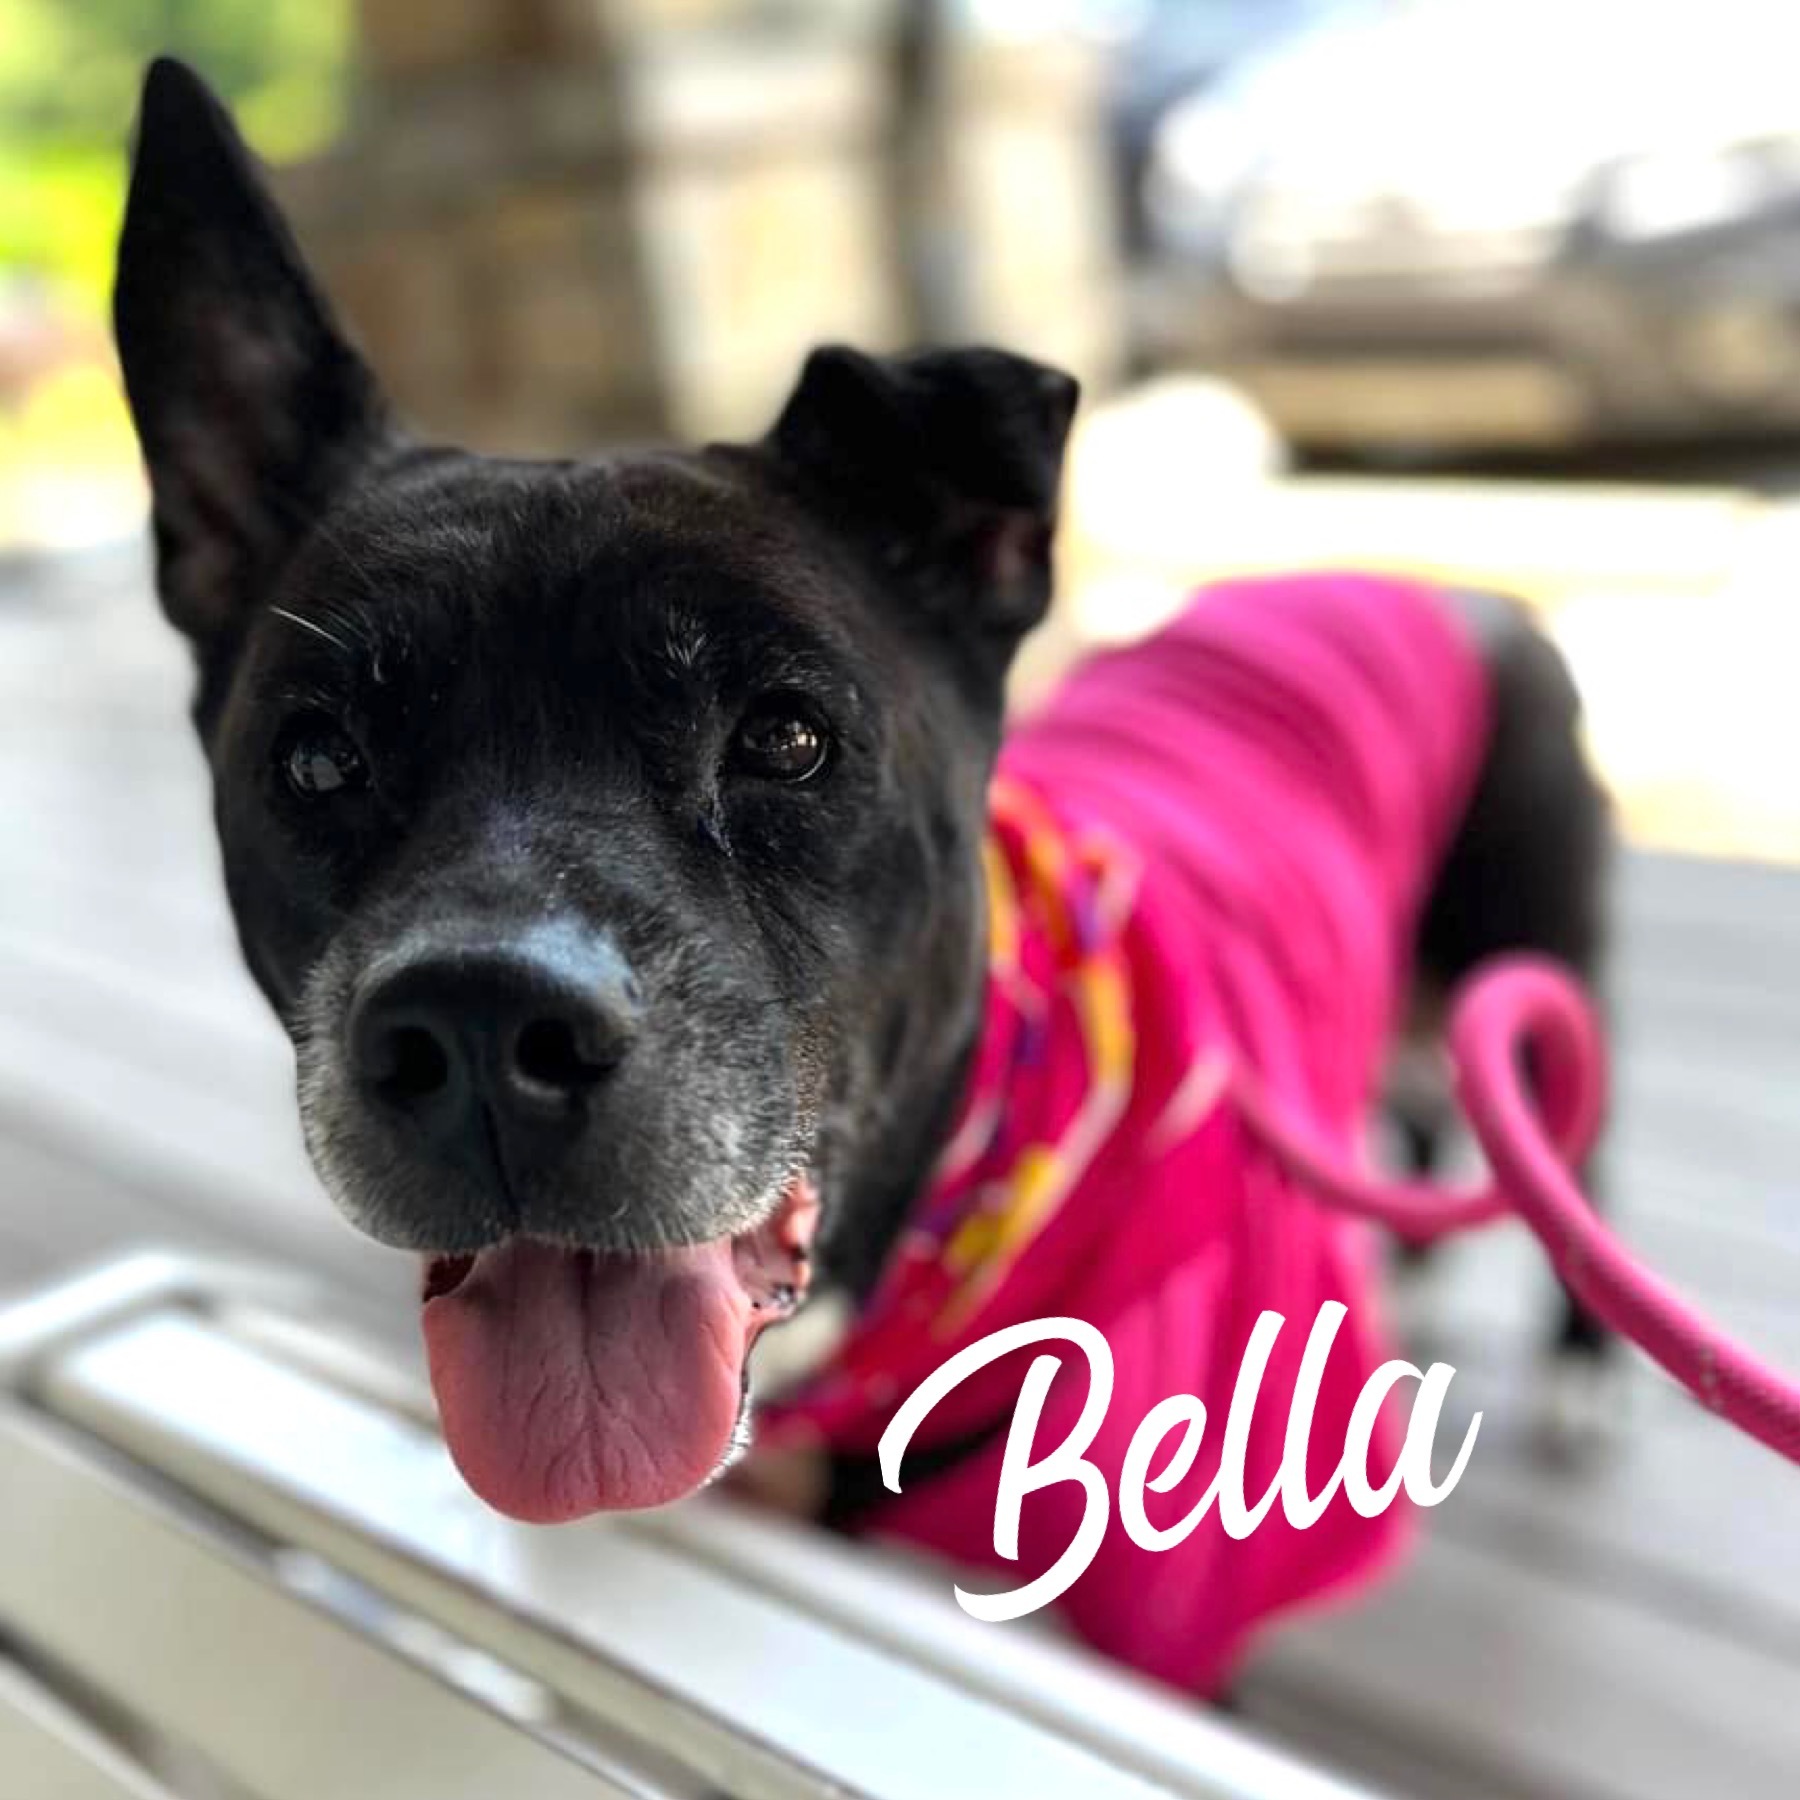 Bella - $10 Adoption Fee